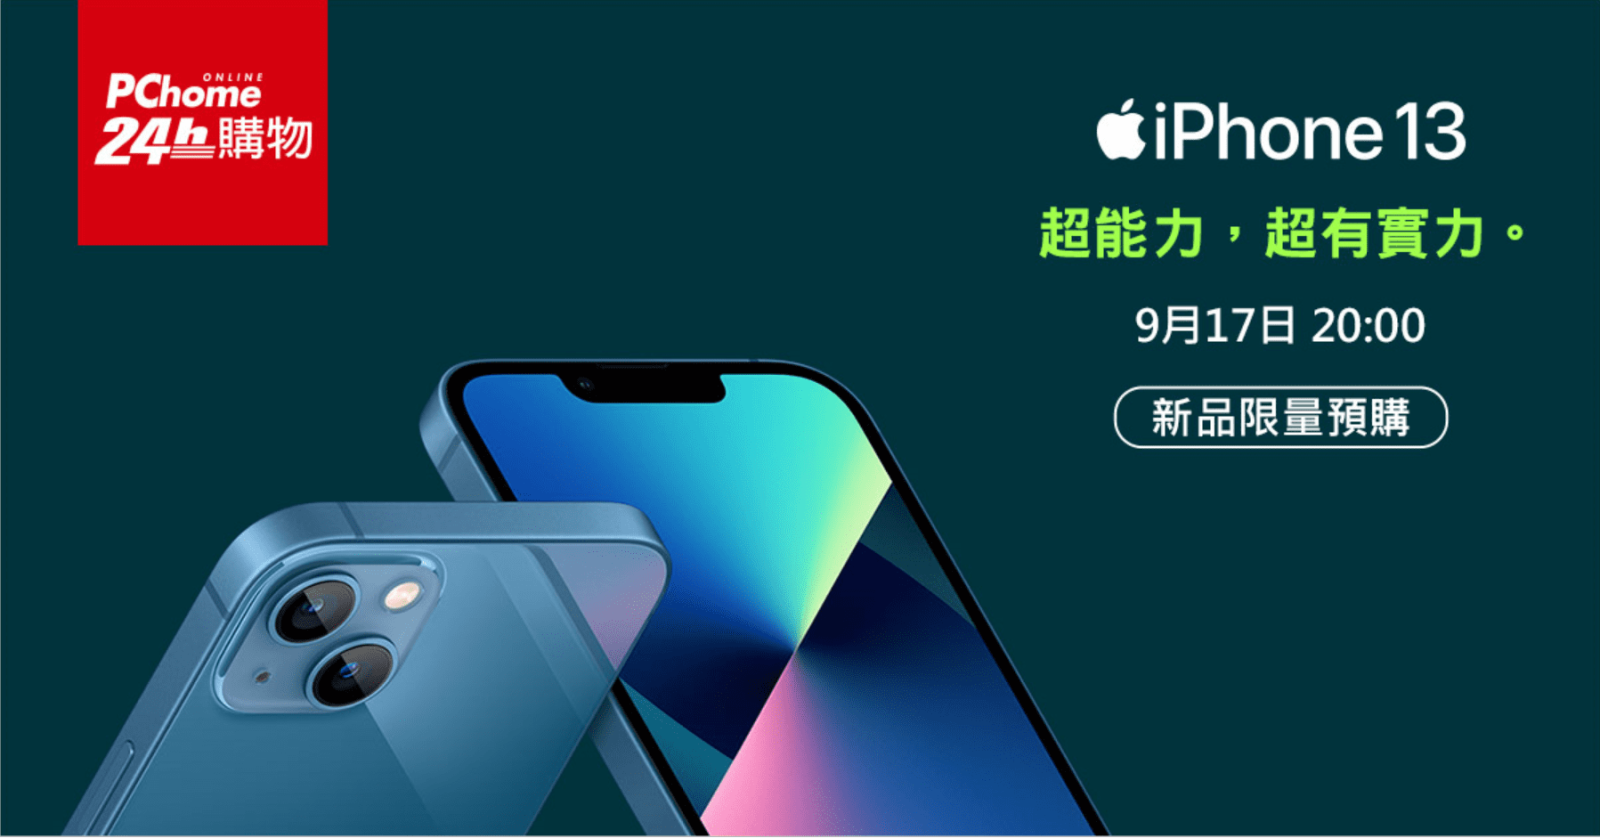 「iPhone 13」系列搶先預購！台灣電商唯一全系列 Apple 授權經銷商 PChome 24h 購物 9/17 晚上 8 點搶先開放 iPhone 13 全系列新機預購 @3C 達人廖阿輝